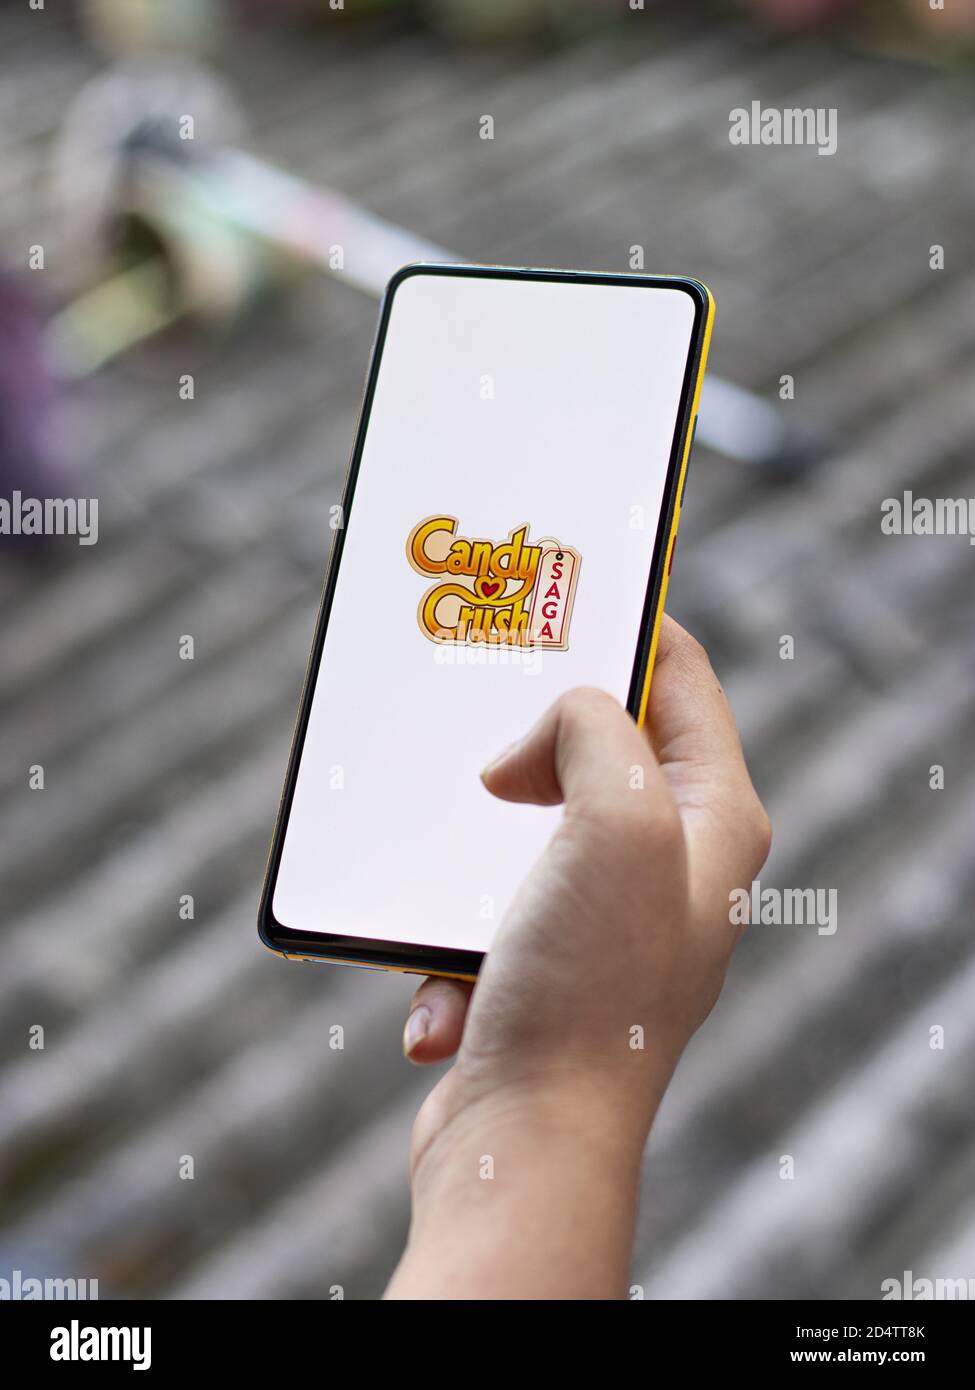 Assam, india - October 11, 2020 : Candy crush saga logo on phone screen stock image. Stock Photo